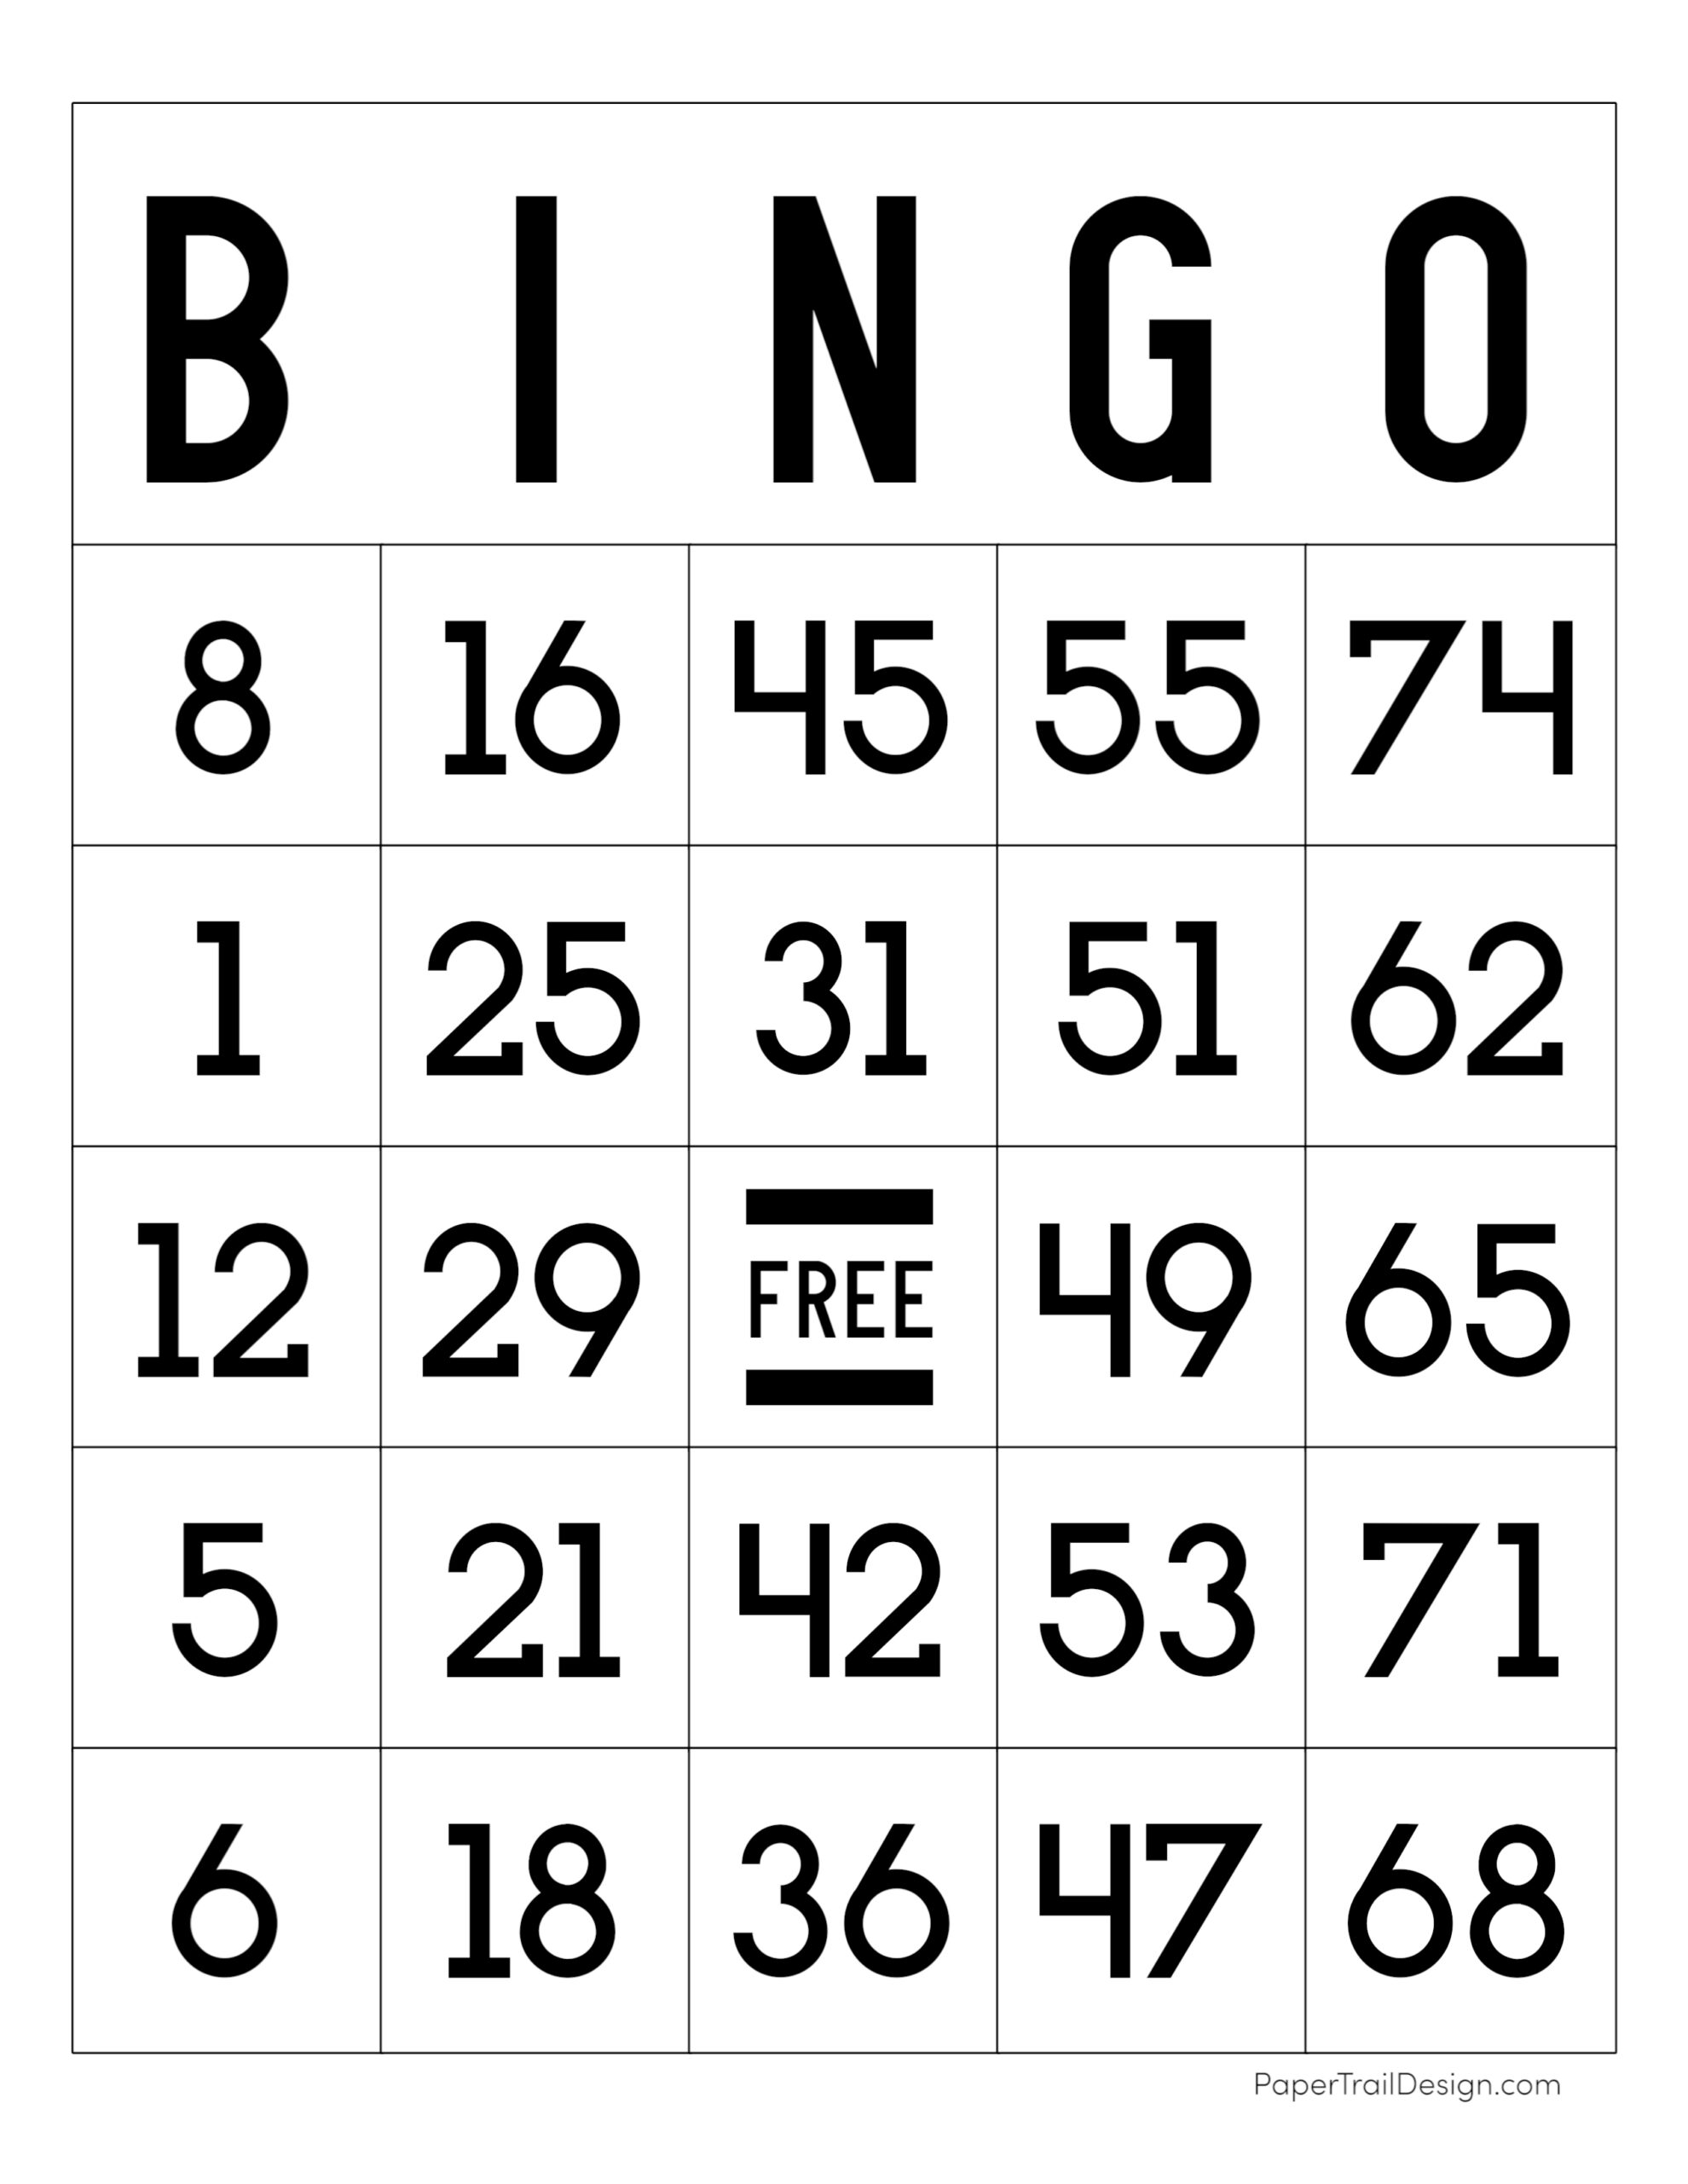 bingo-printable-sheets